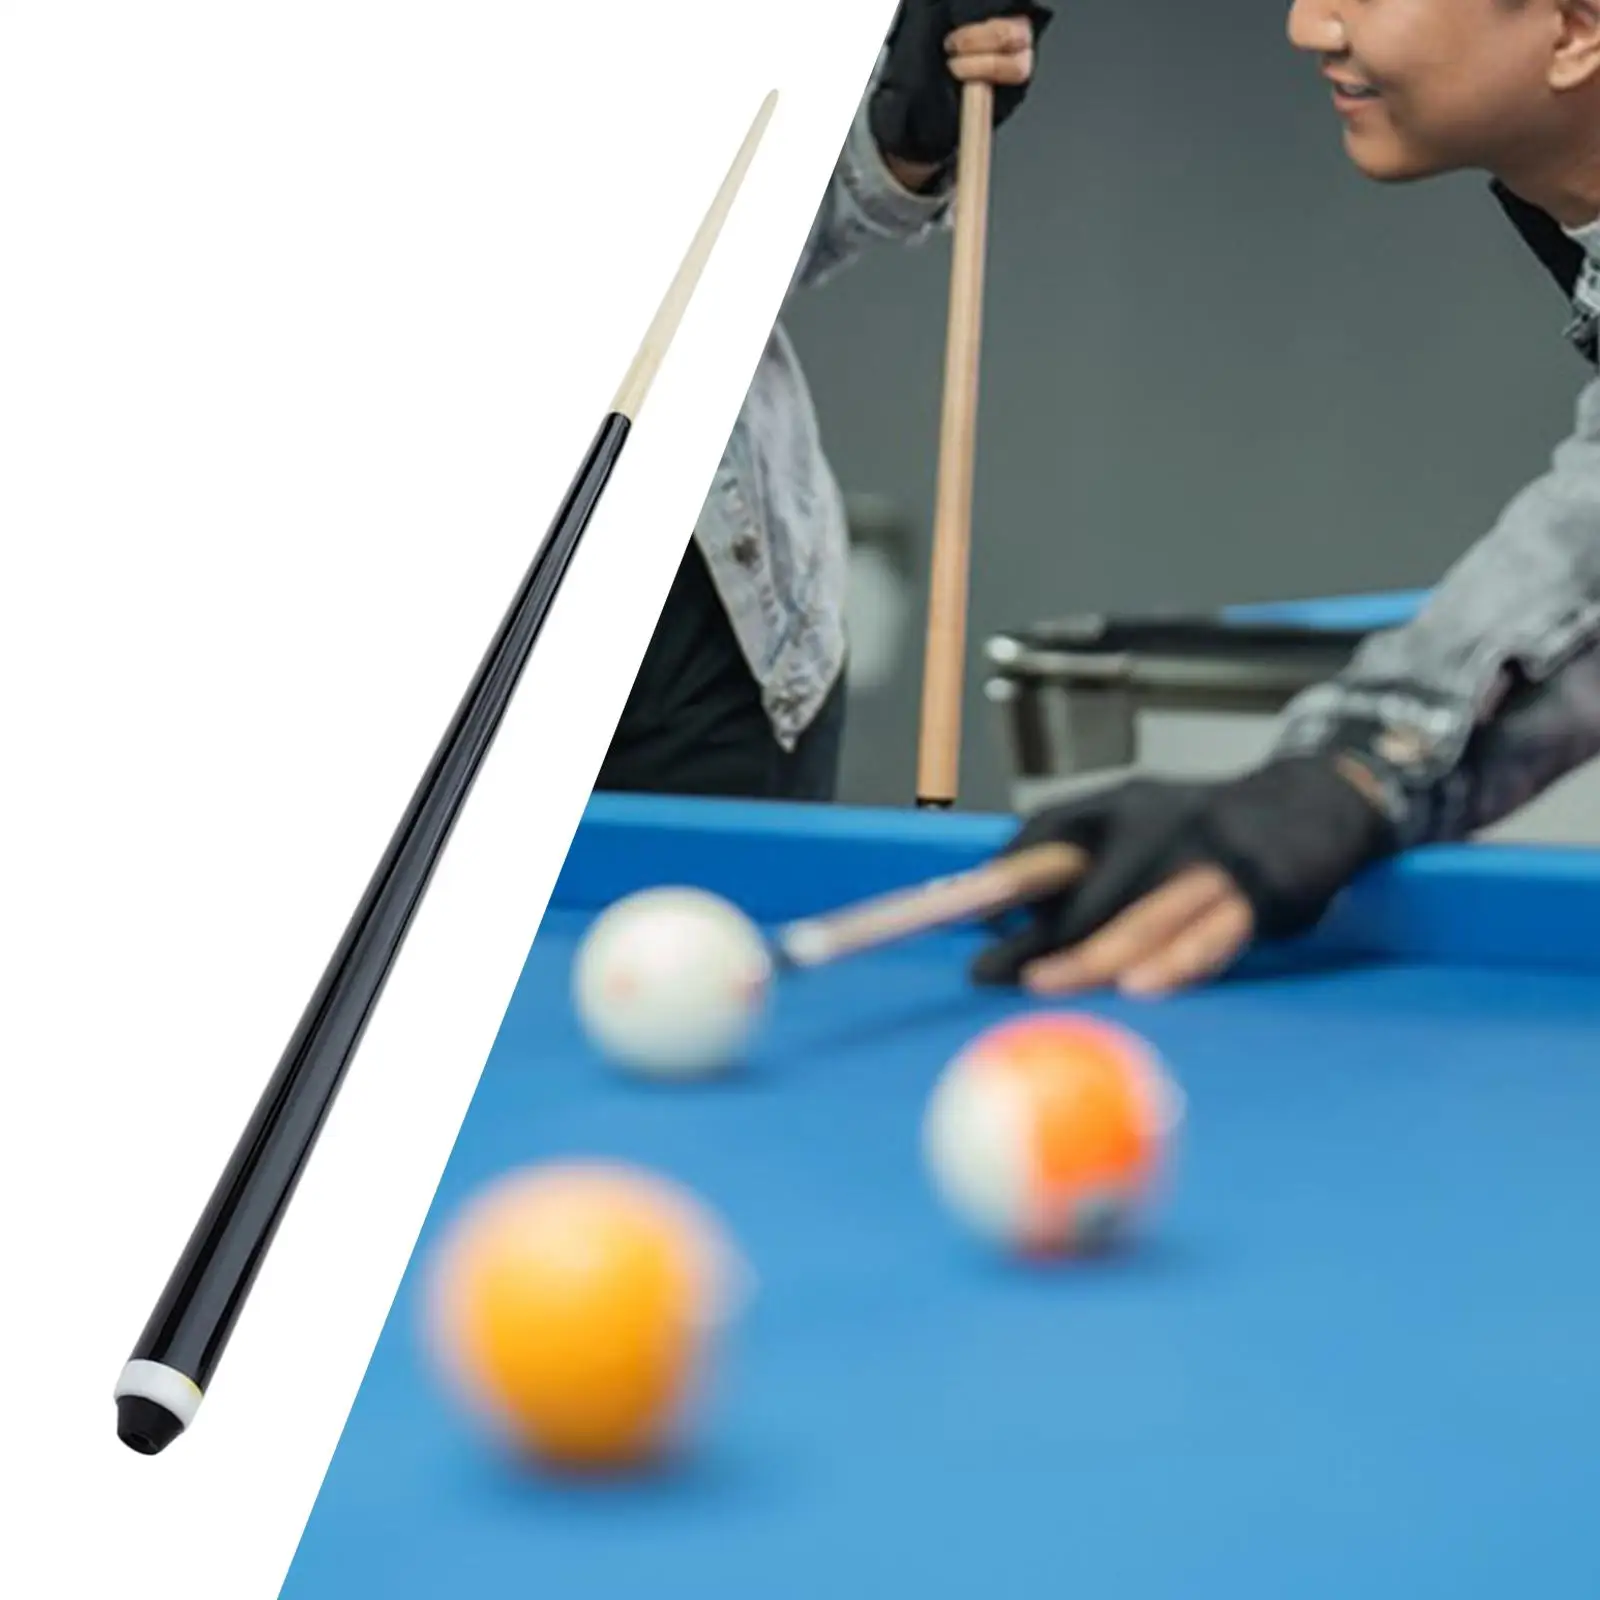 Billiard Cue Stick Pool Cue Bridge Stick for Training Billiard Table Sports